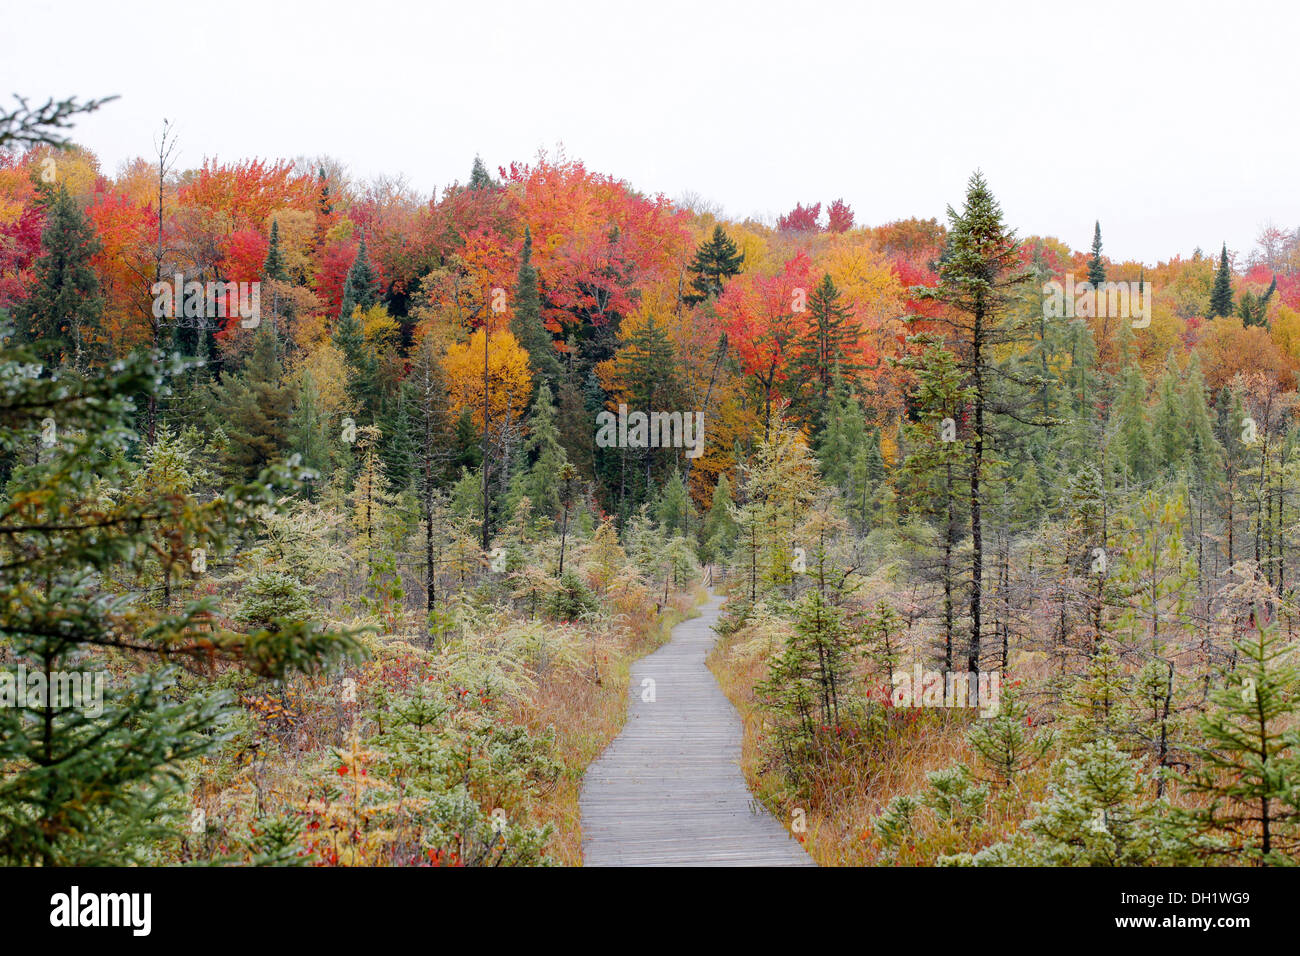 Trail, a boardwalk in autumn, Adirondack Mountains, Upstate New York, USA Stock Photo